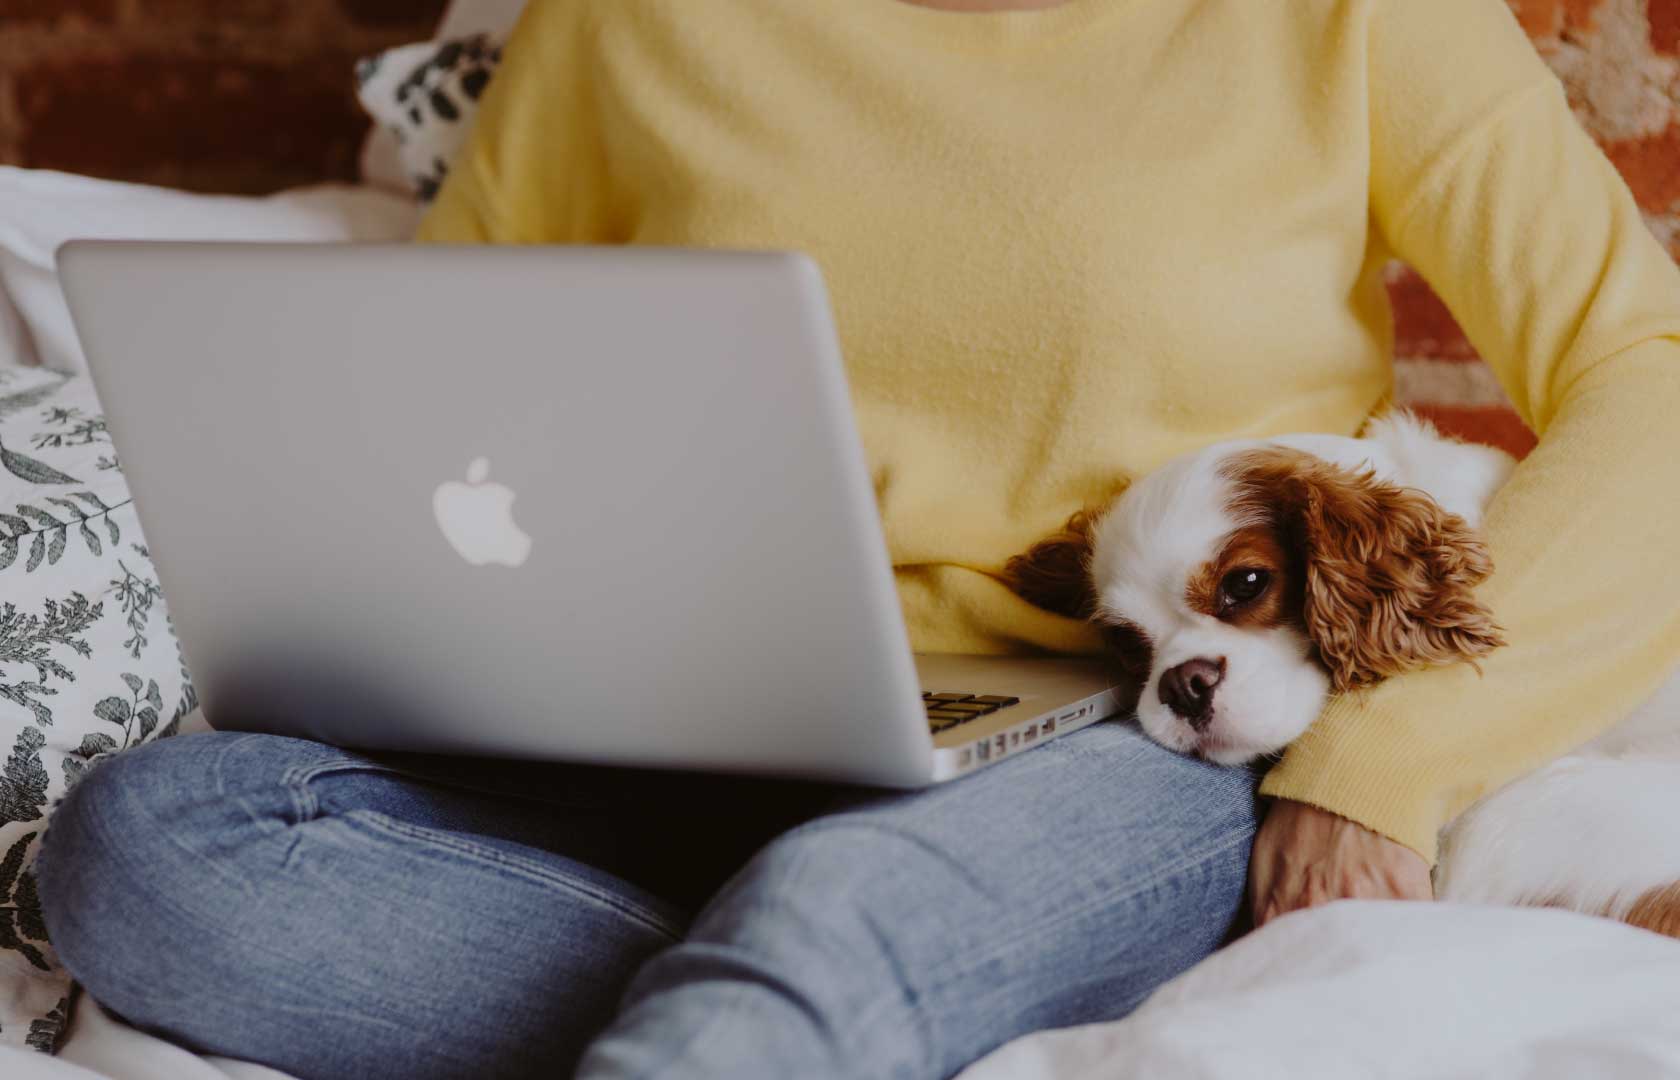 Dame sitter i sofa med en Mac, på fanget hviler en liten hund